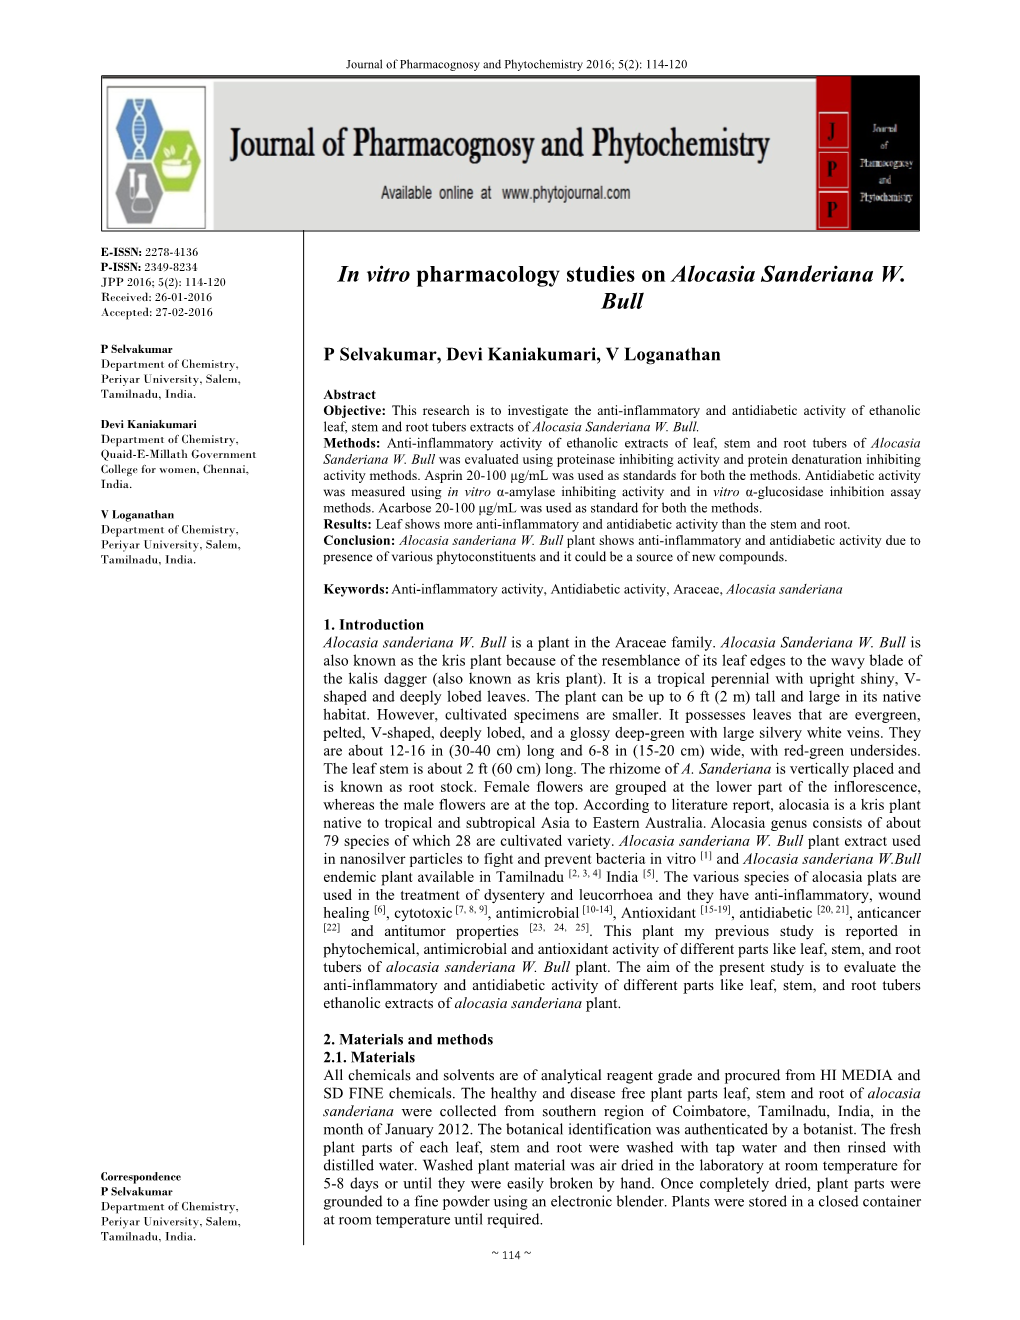 In Vitro Pharmacology Studies on Alocasia Sanderiana W. Bull